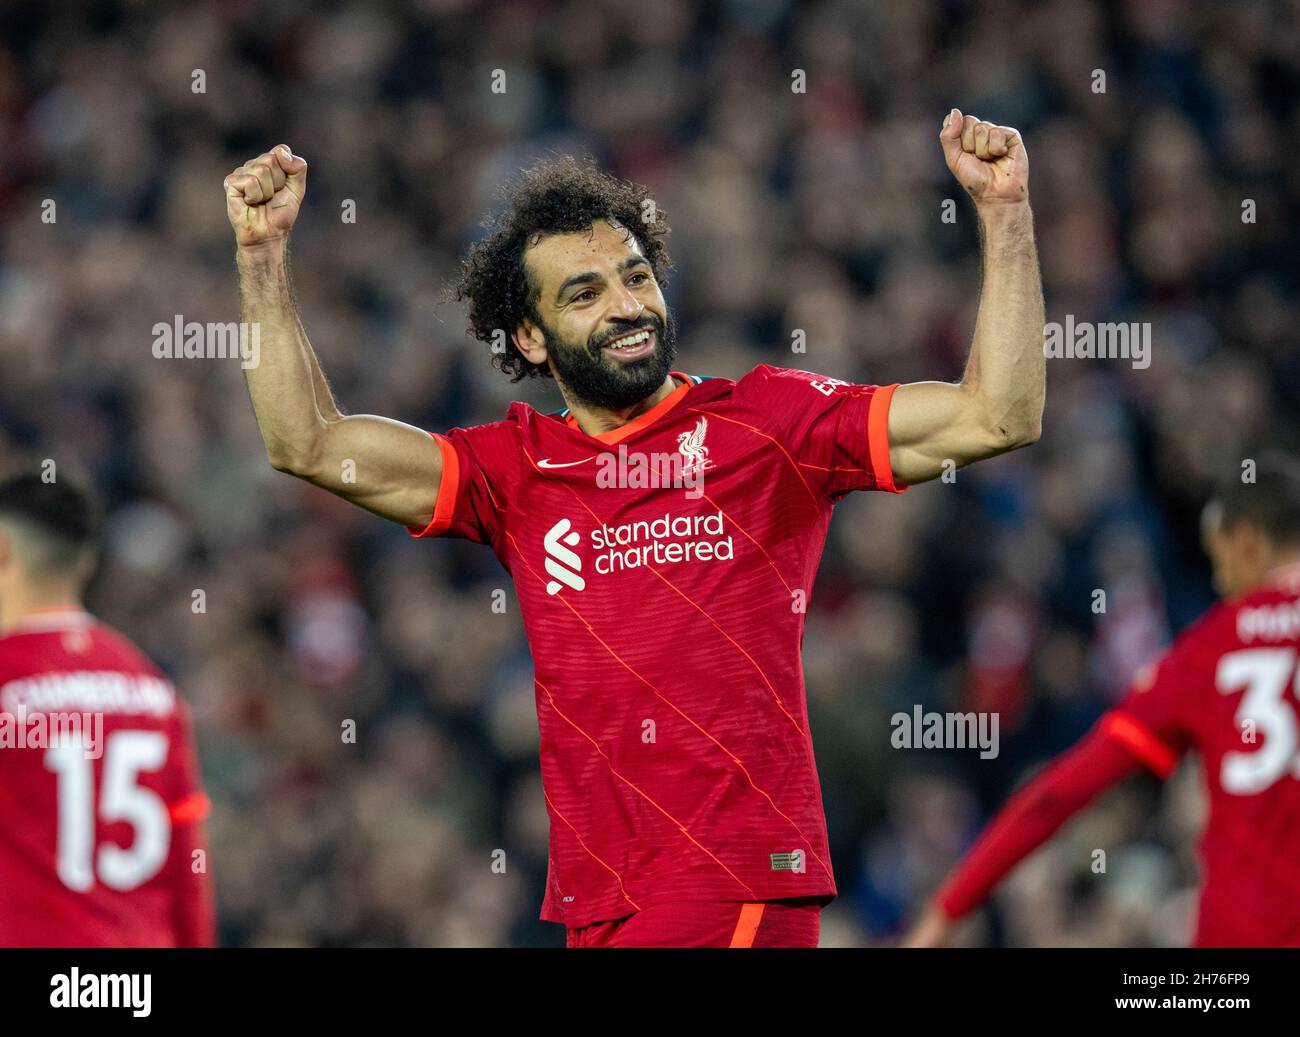 Liverpool. 21st Nov, 2021. Liverpool's Mohamed Salah celebrates